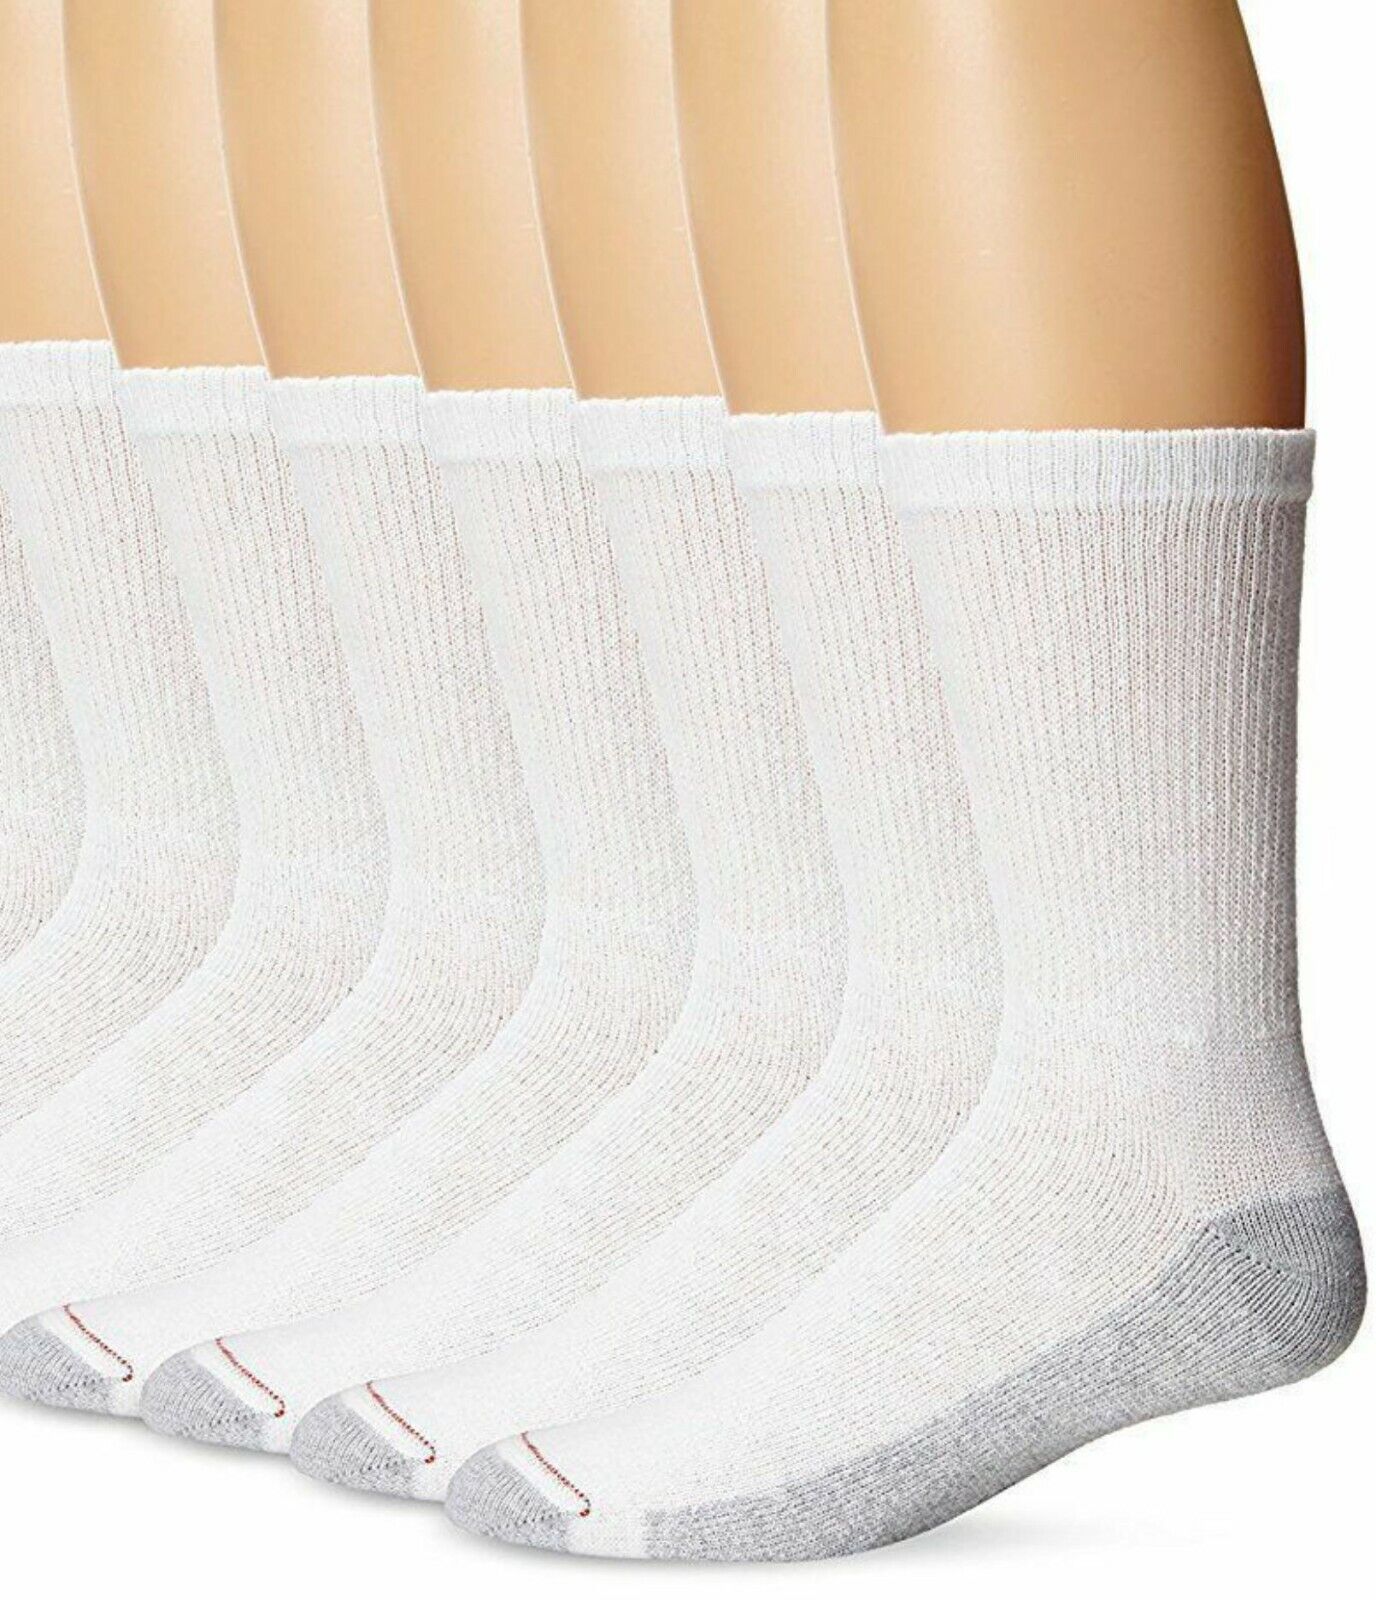 12 Pairs Hanes Premium Cushion Crew  Men's Cotton Socks, Crew, White, size 12-14 Hanes